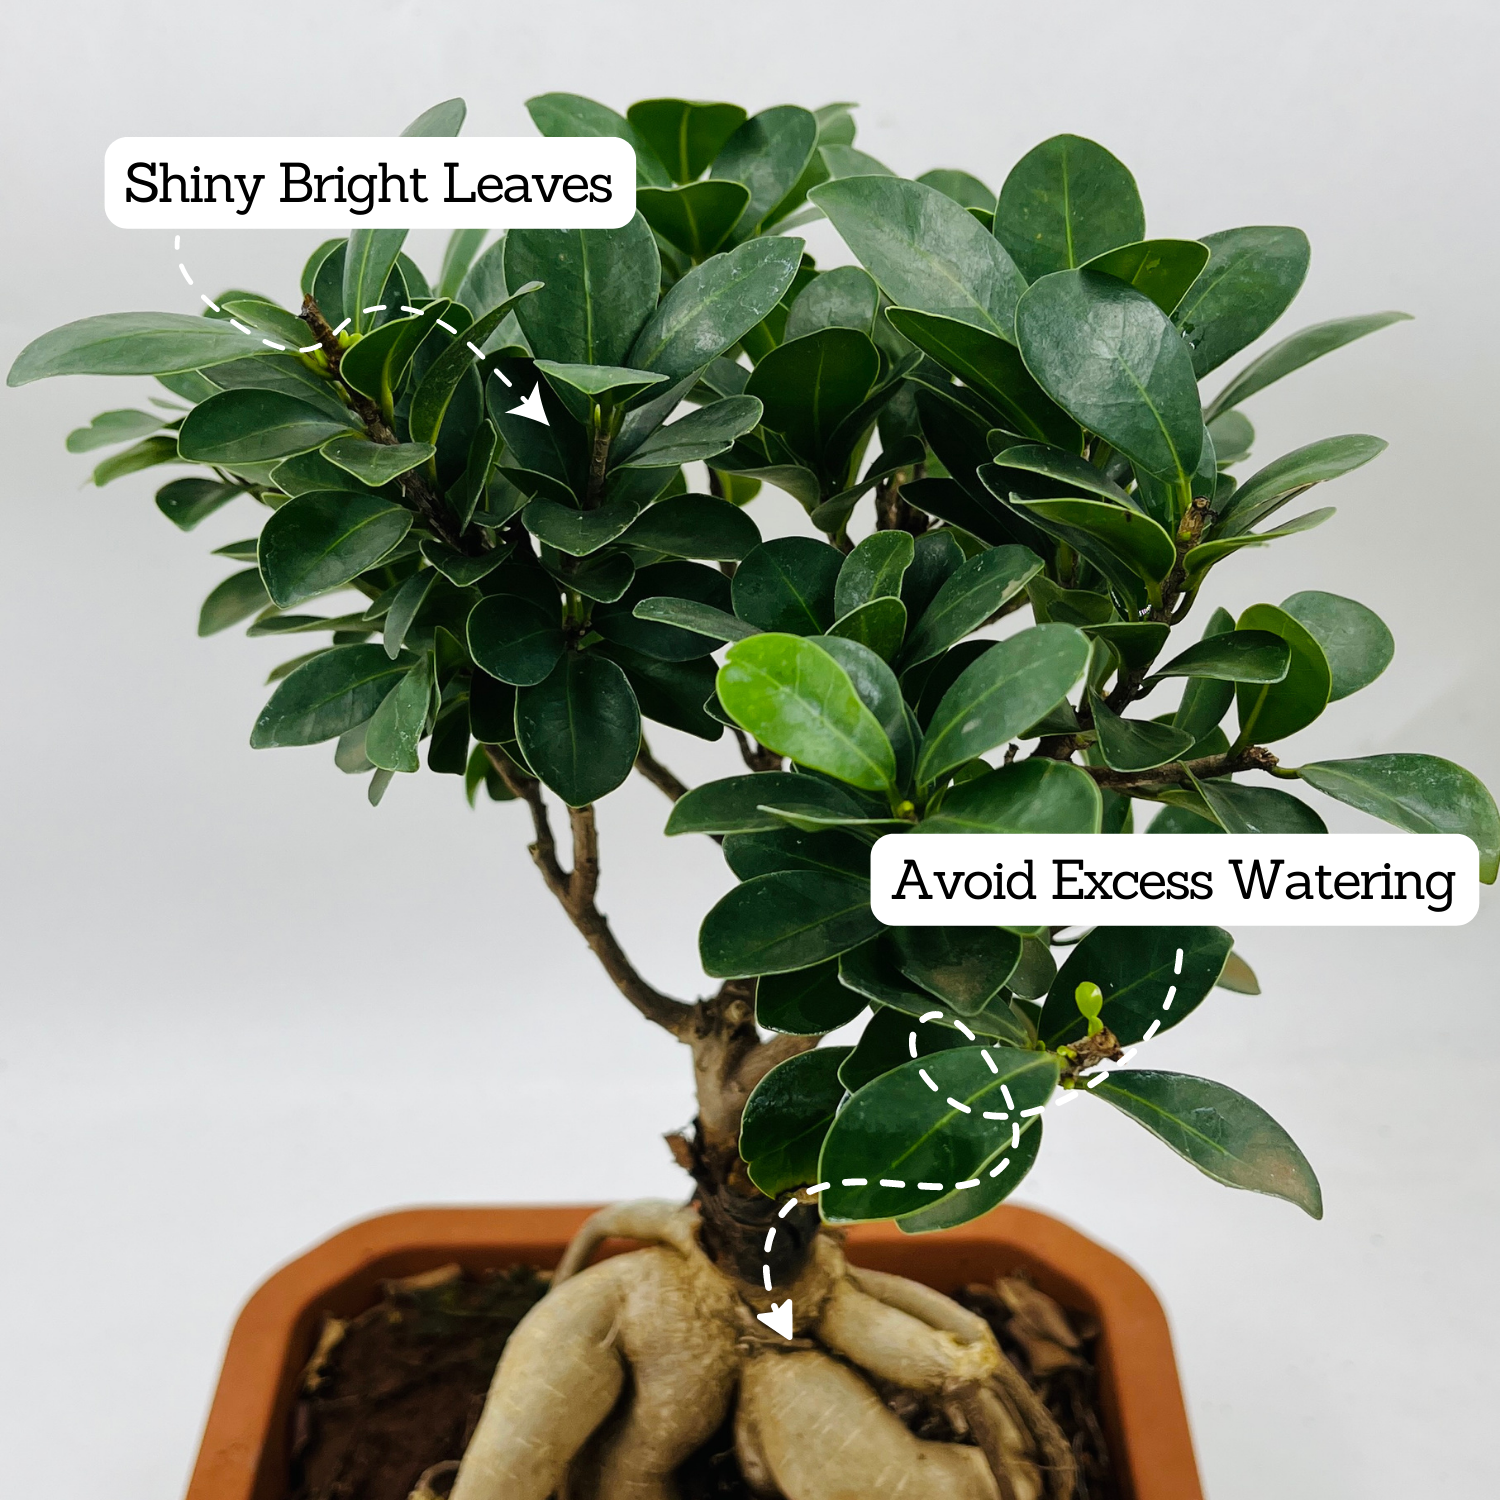 Bonsai Ficus (Grafted - Ficus retusa)- Live Plant in 16cm Pot (Home & Graden)